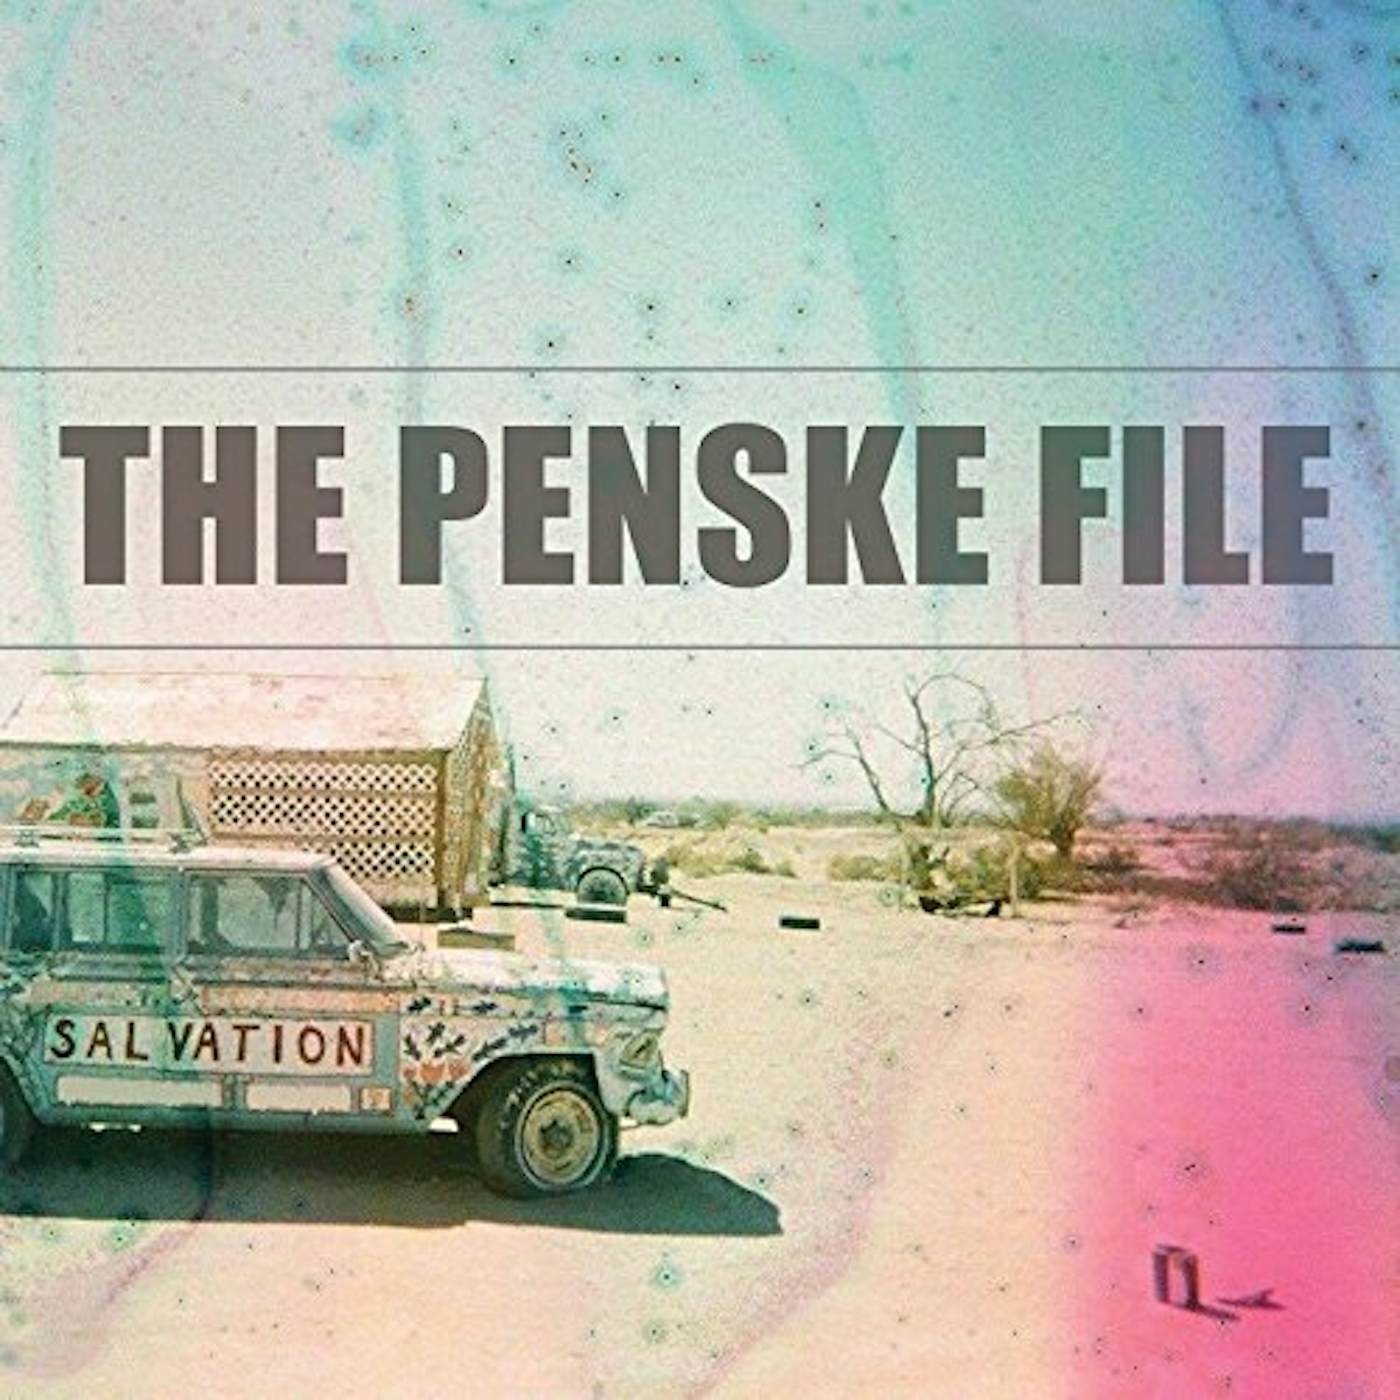 The Penske File Salvation Vinyl Record